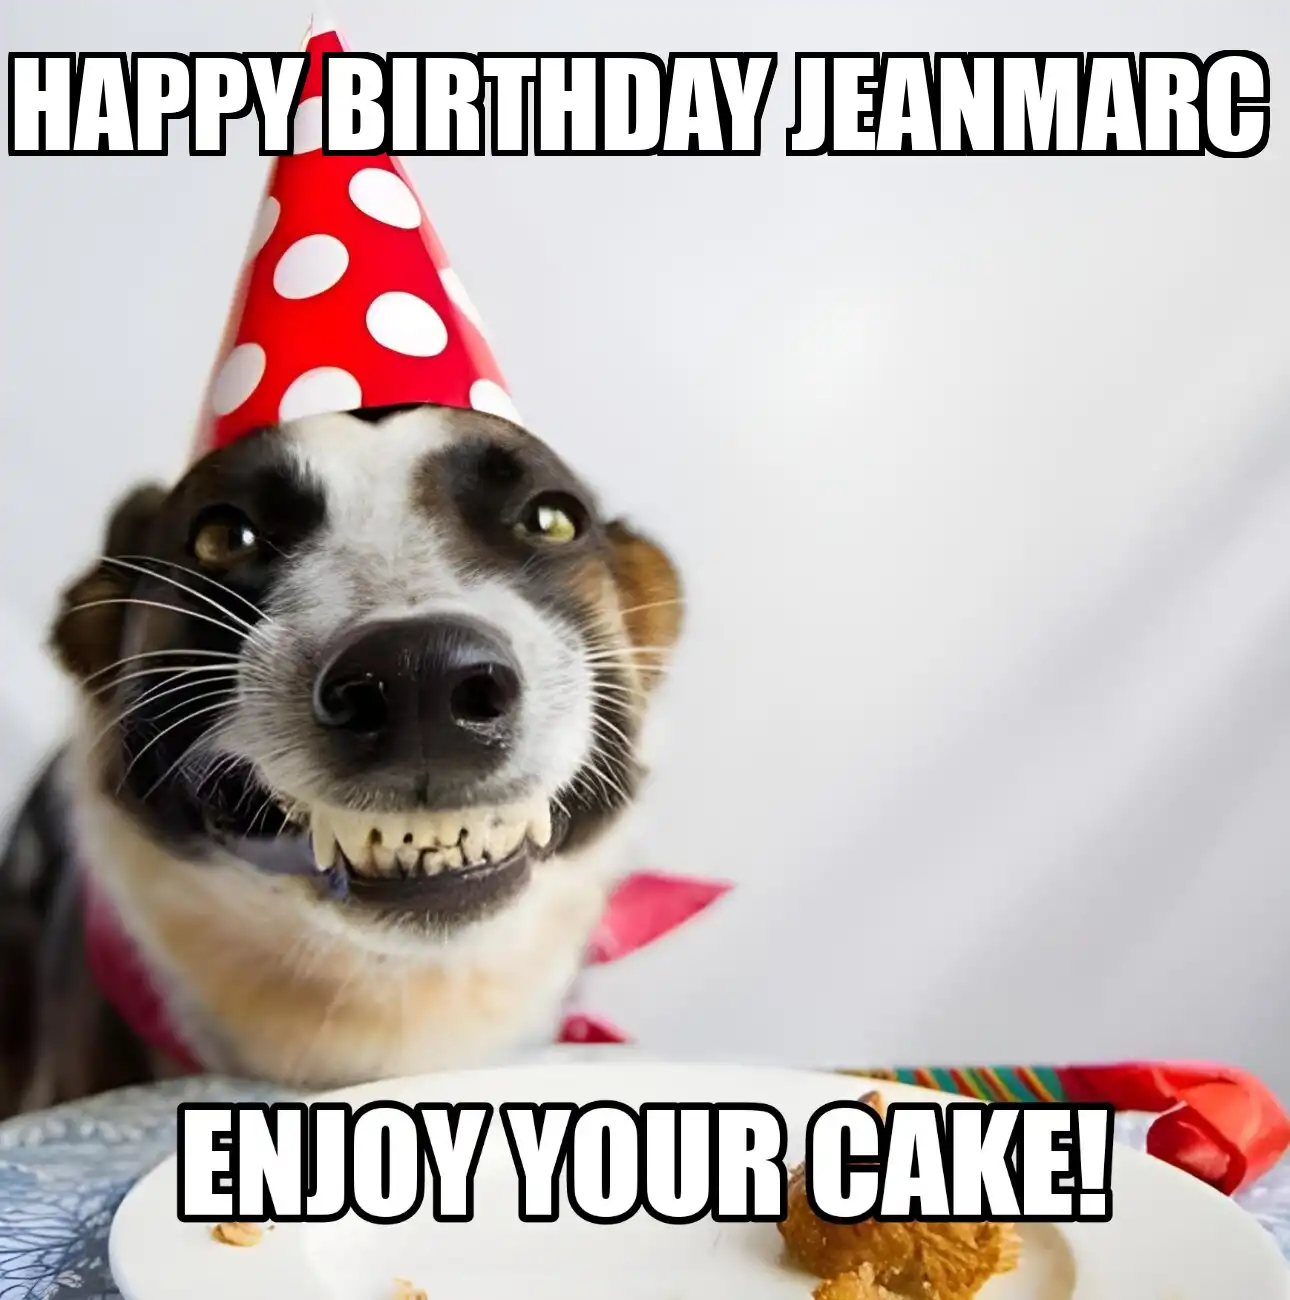 Happy Birthday Jeanmarc Enjoy Your Cake Dog Meme